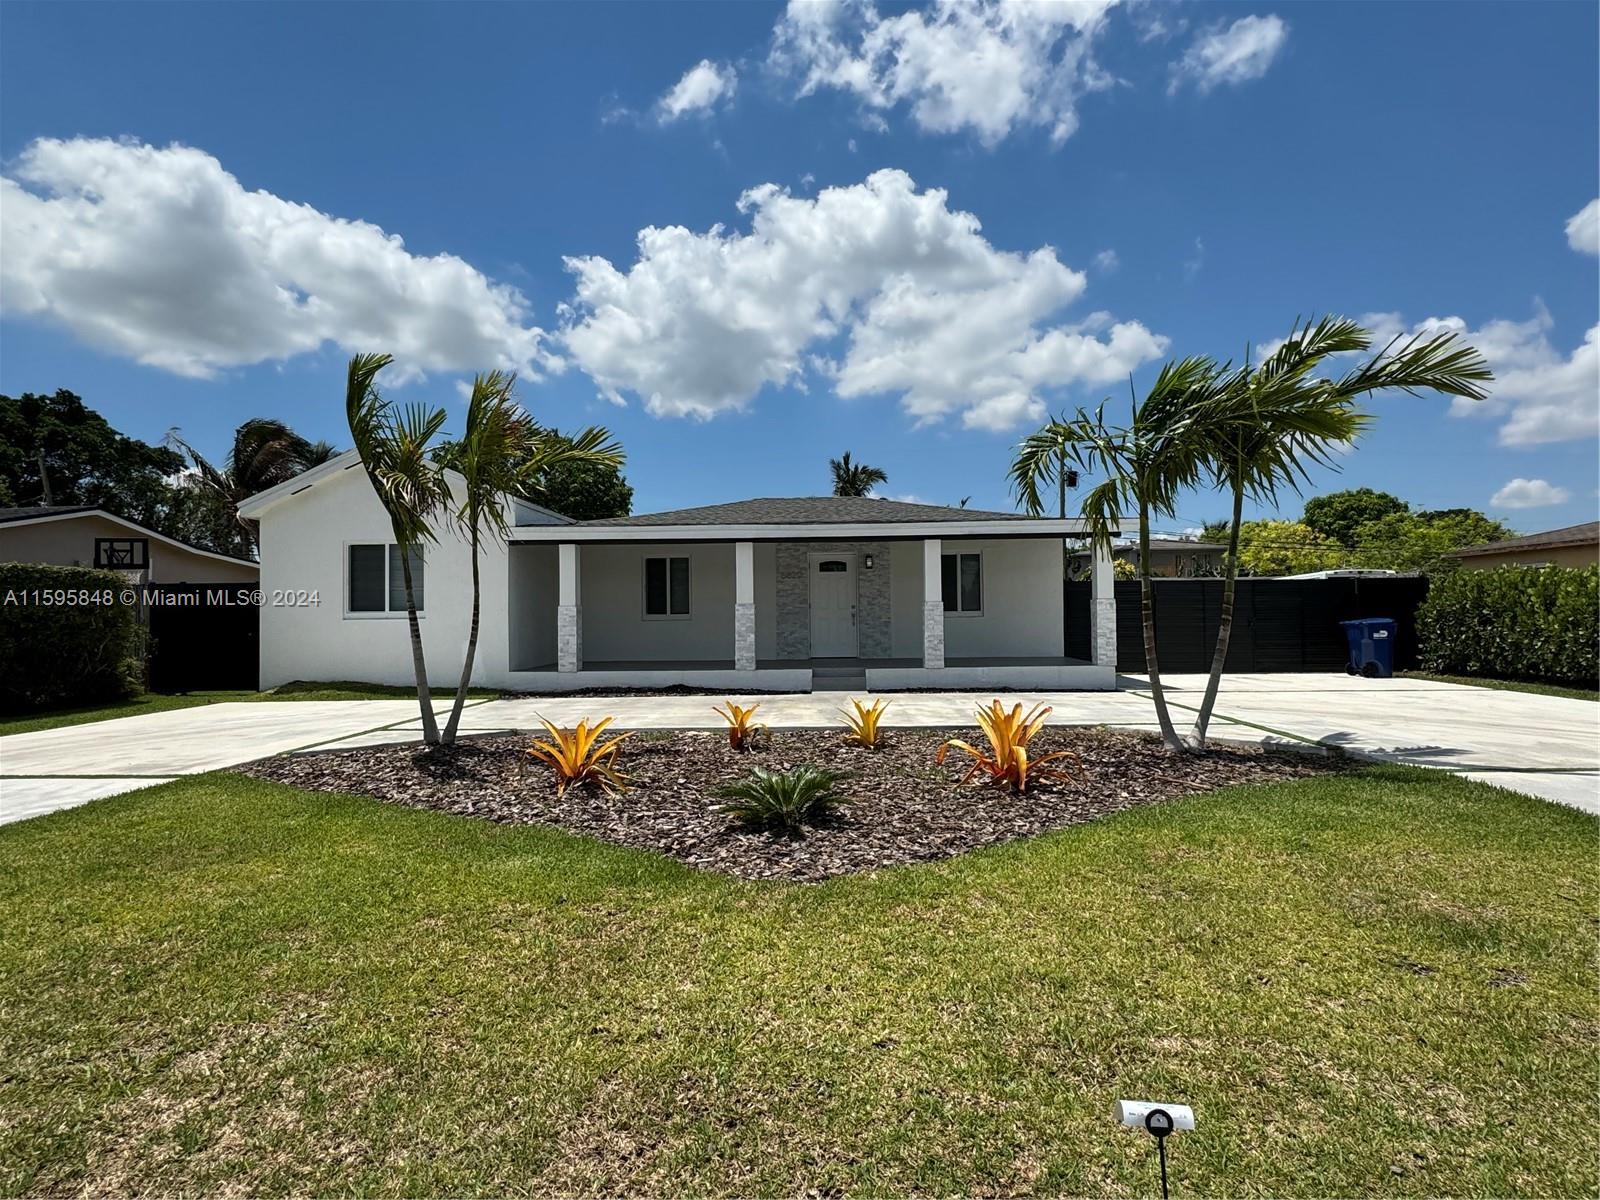 Rental Property at 6820 Sw 19th Ter Ter, Miami, Broward County, Florida - Bedrooms: 4 
Bathrooms: 2  - $4,850 MO.